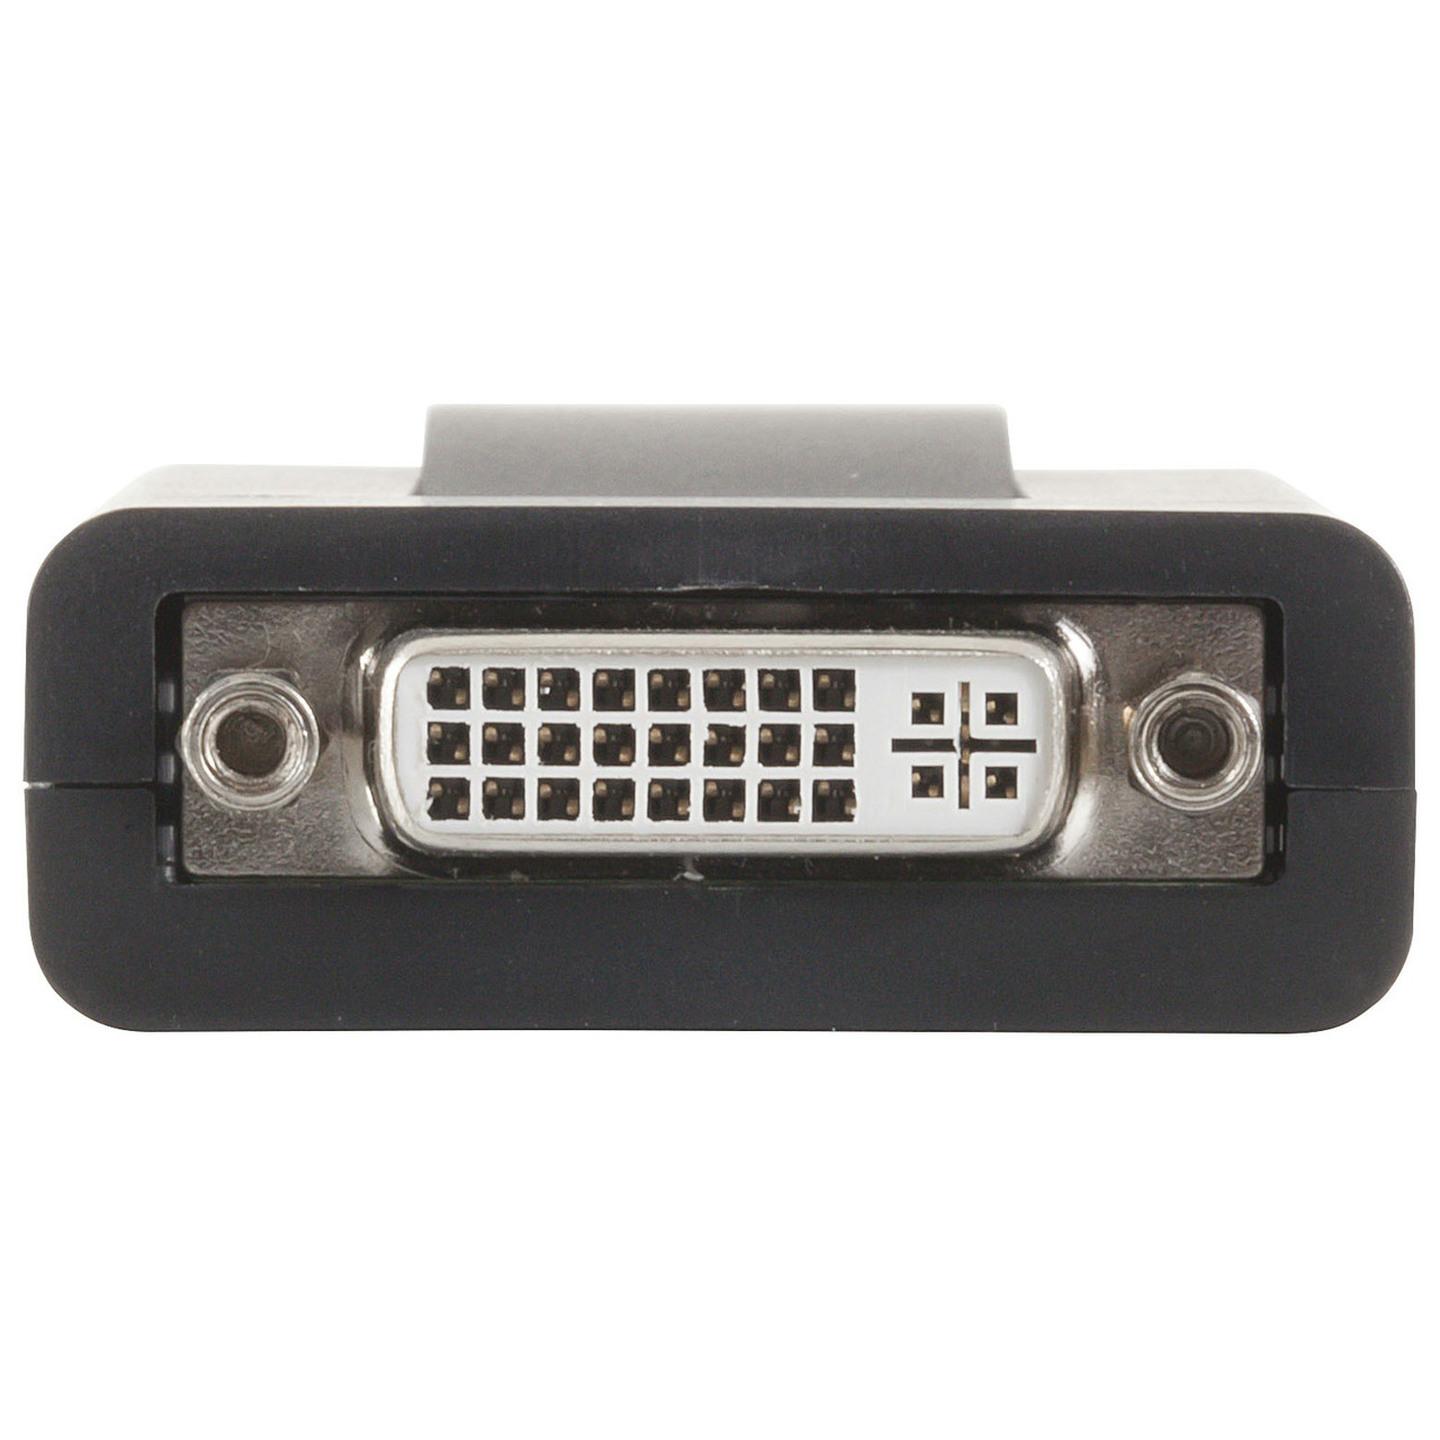 CONVTR USB 3.0 TO DVI/VGA 1080P